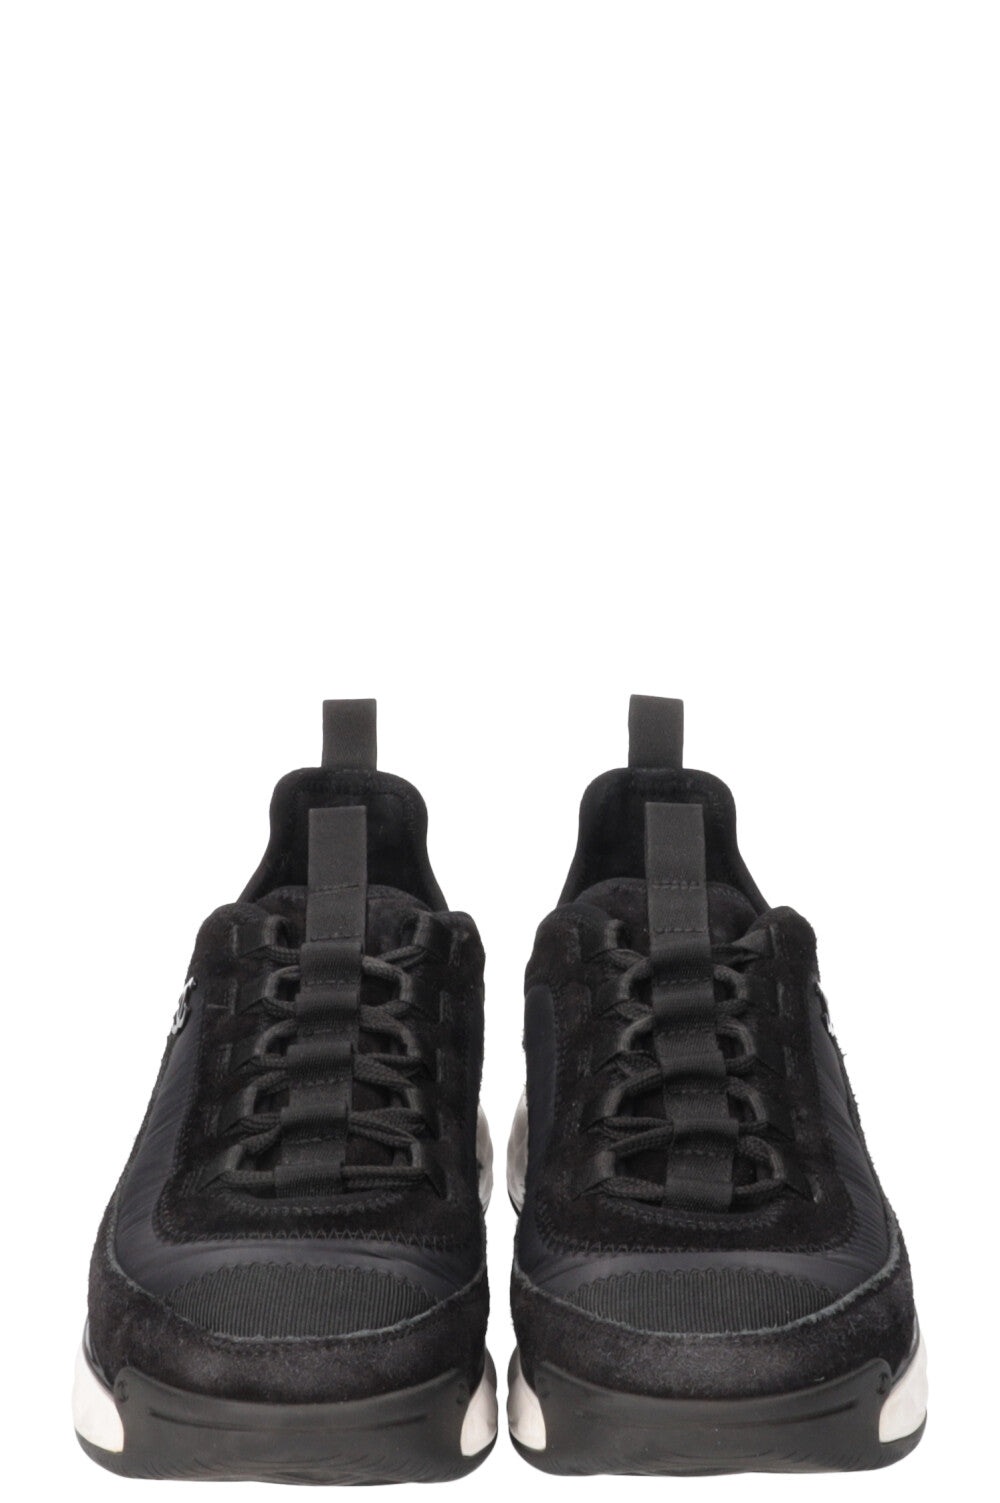 CHANEL Sneakers Black & White